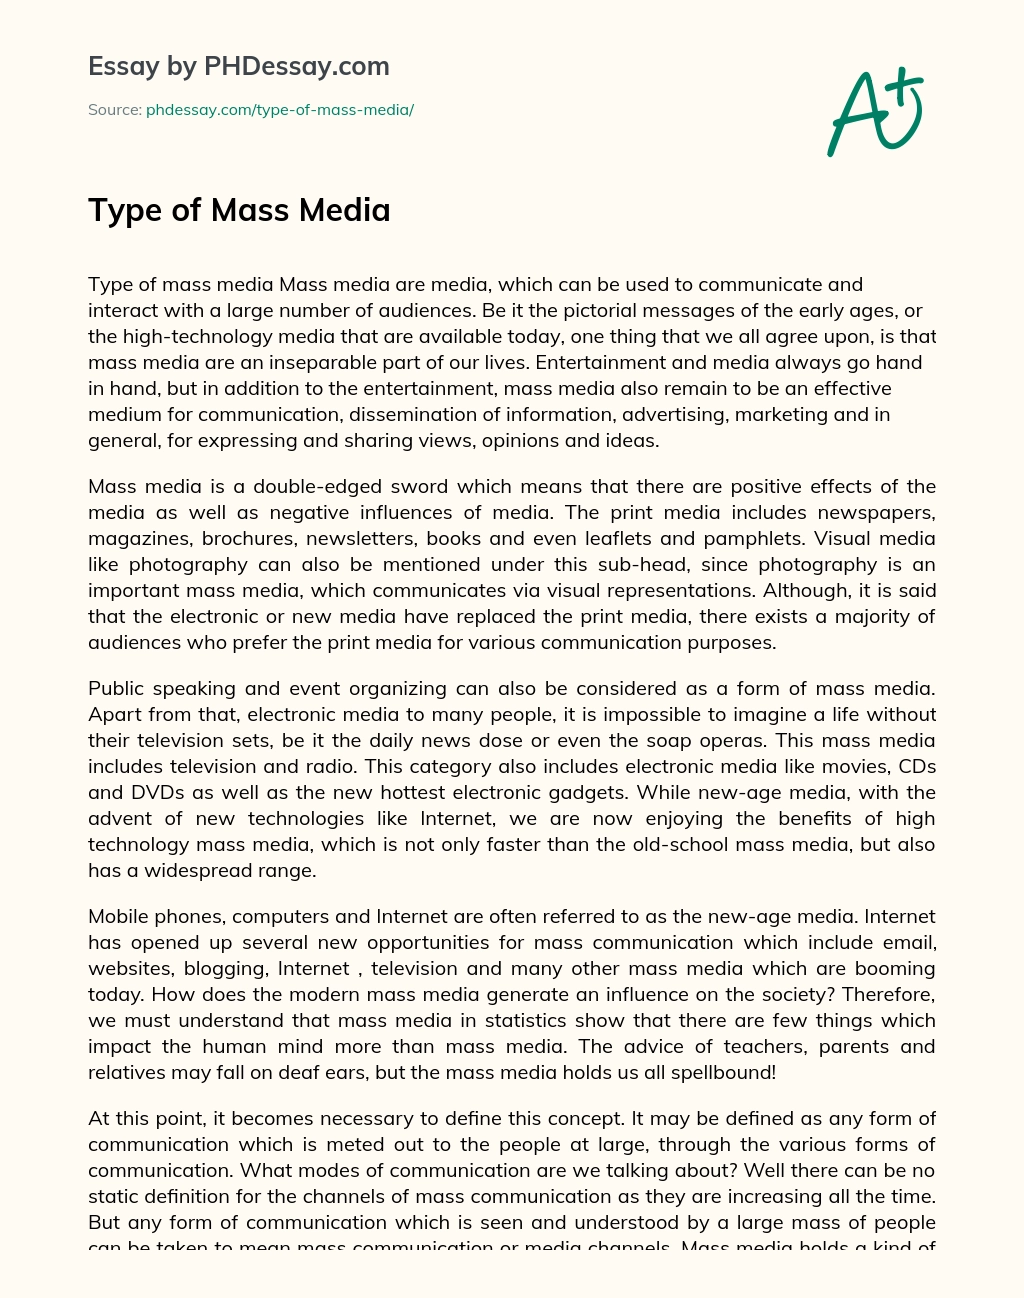 Type of Mass Media essay